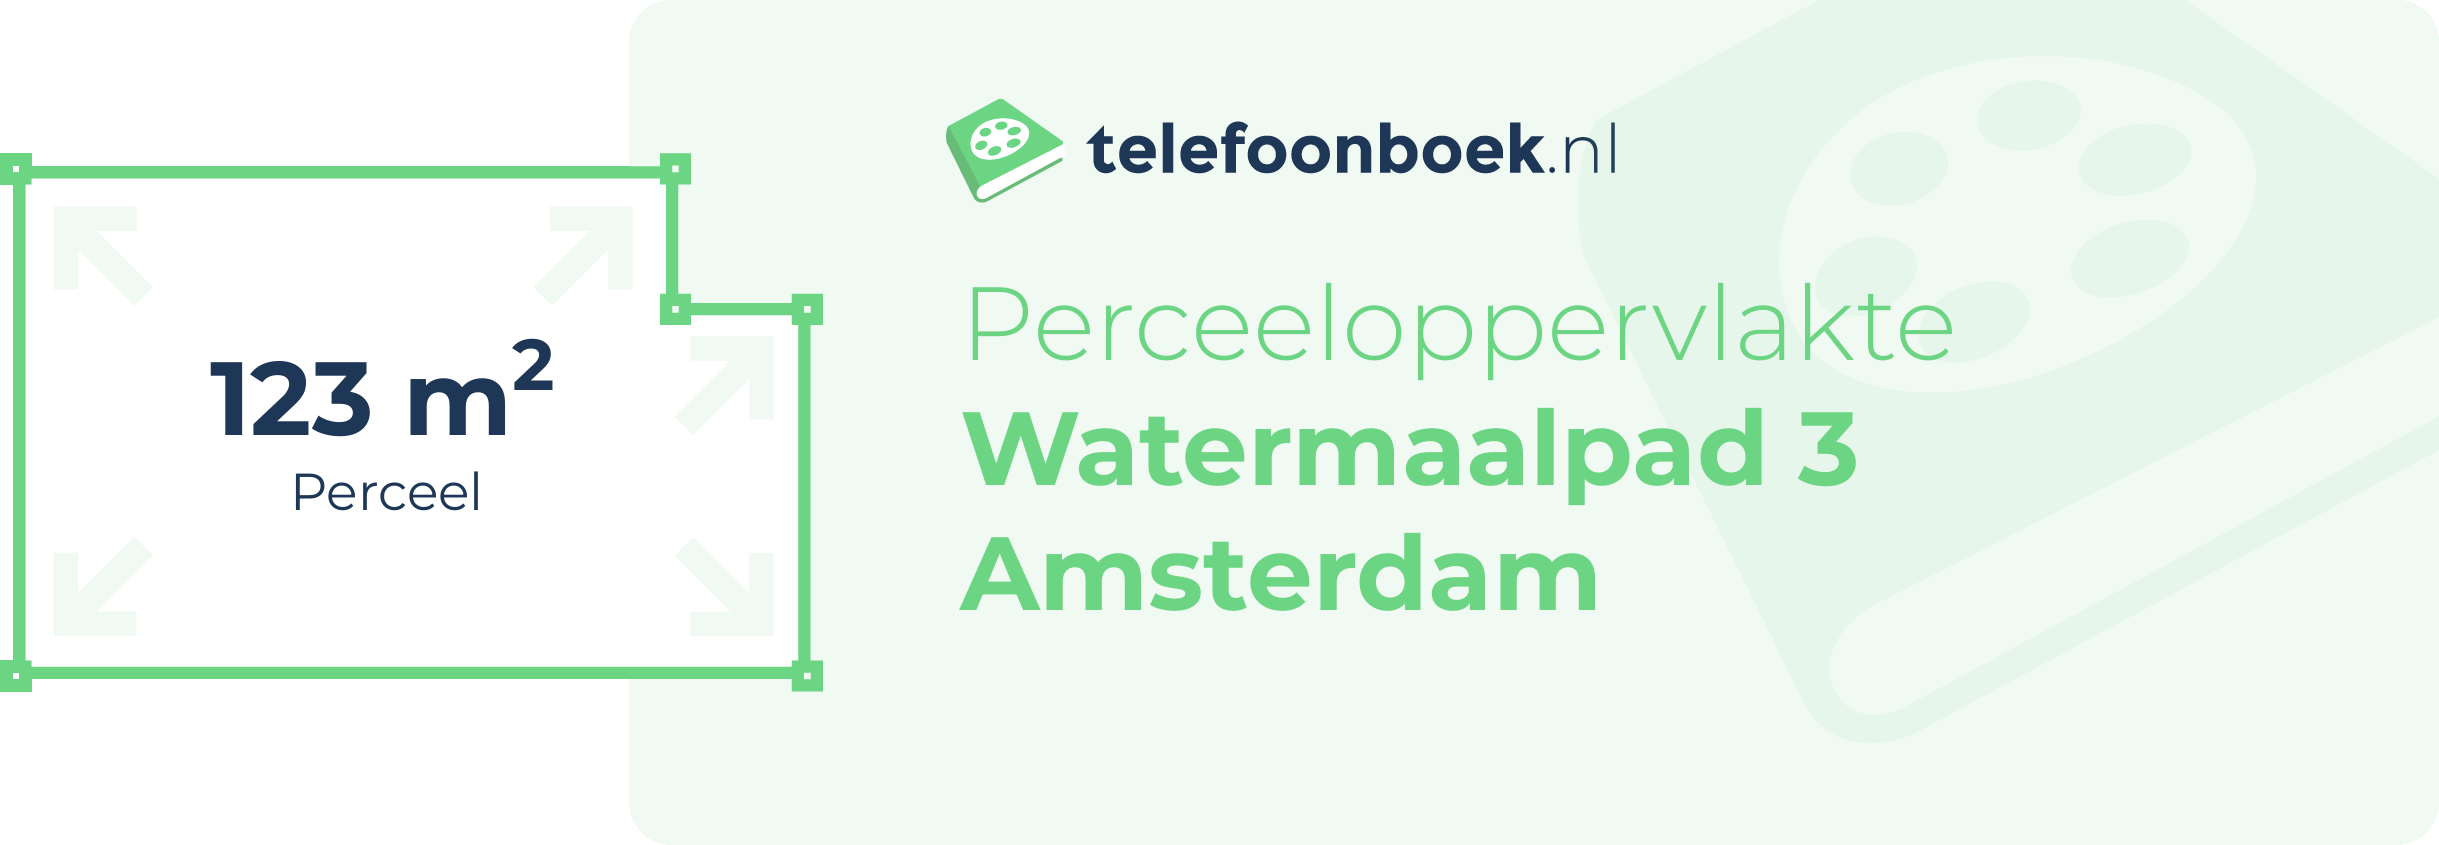 Perceeloppervlakte Watermaalpad 3 Amsterdam